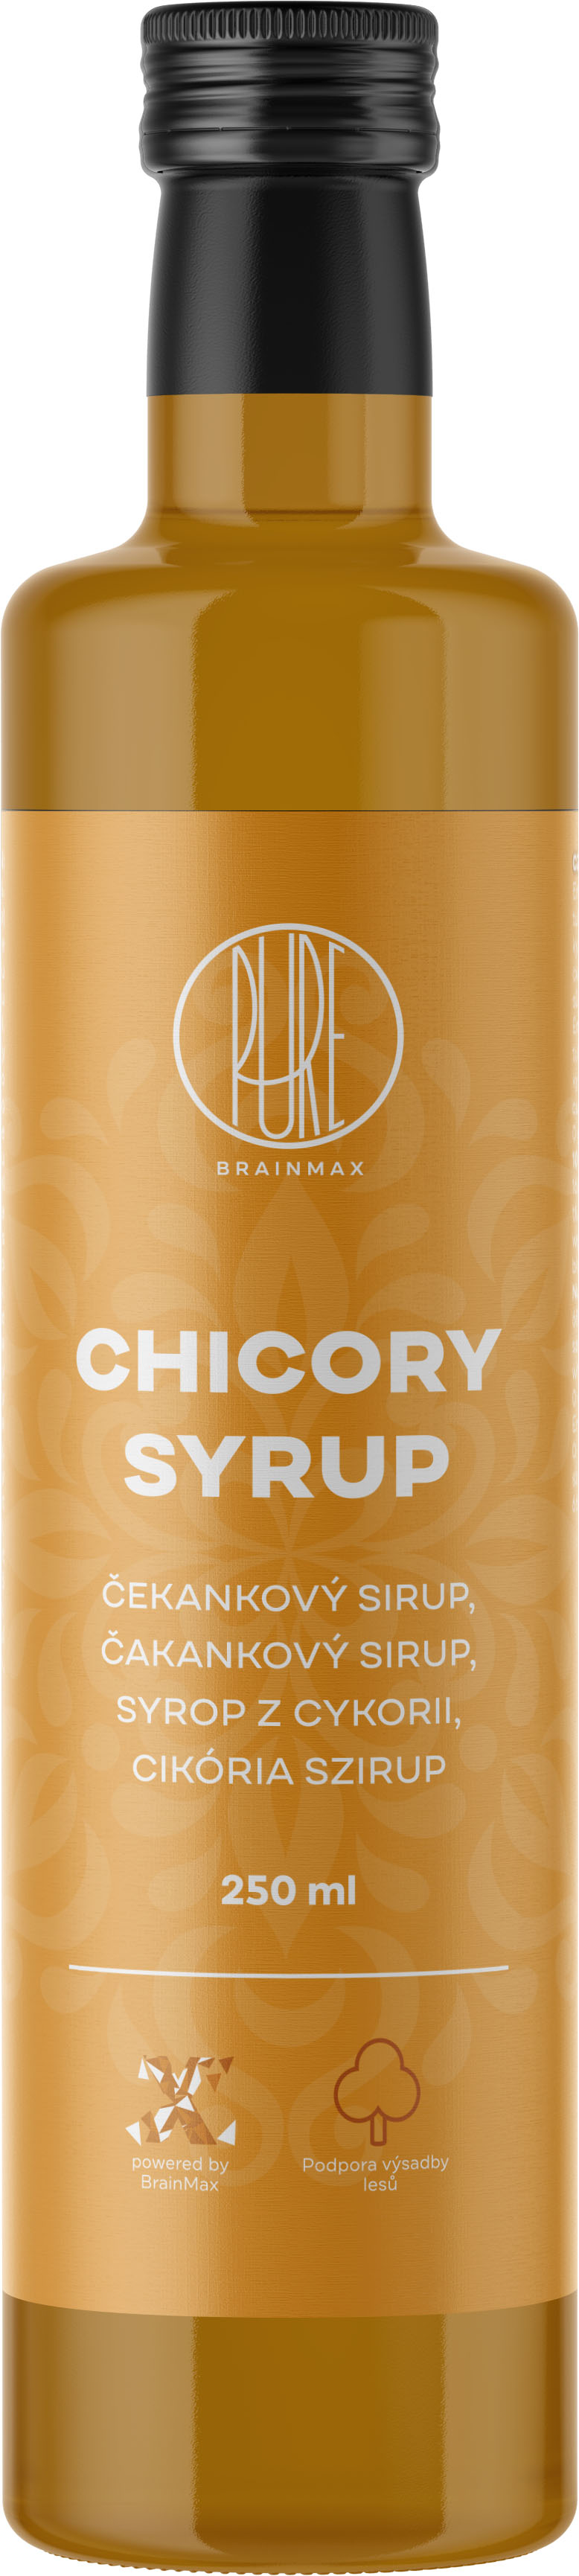 BrainMax Pure Chicory syrup, Čekankový sirup, 250 ml